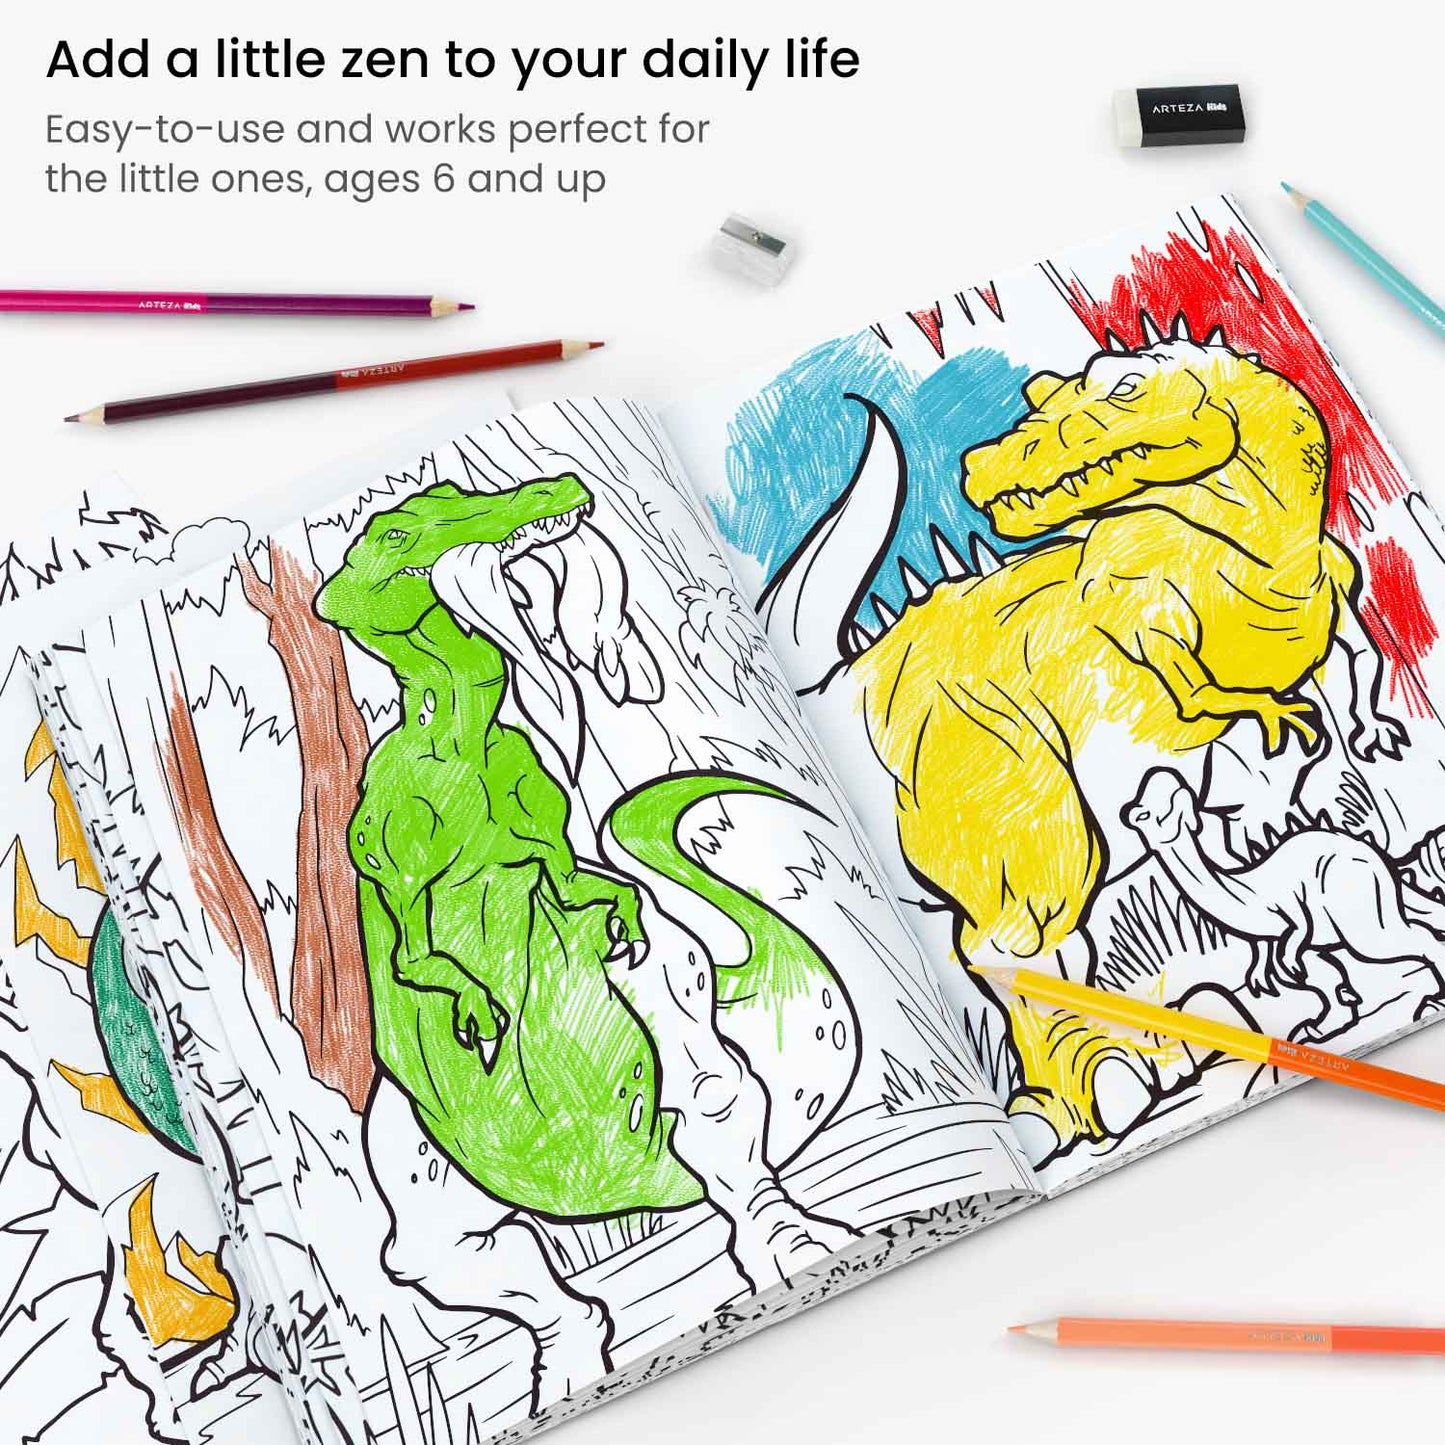 Kids Coloring Book Kit, Dinosaurs